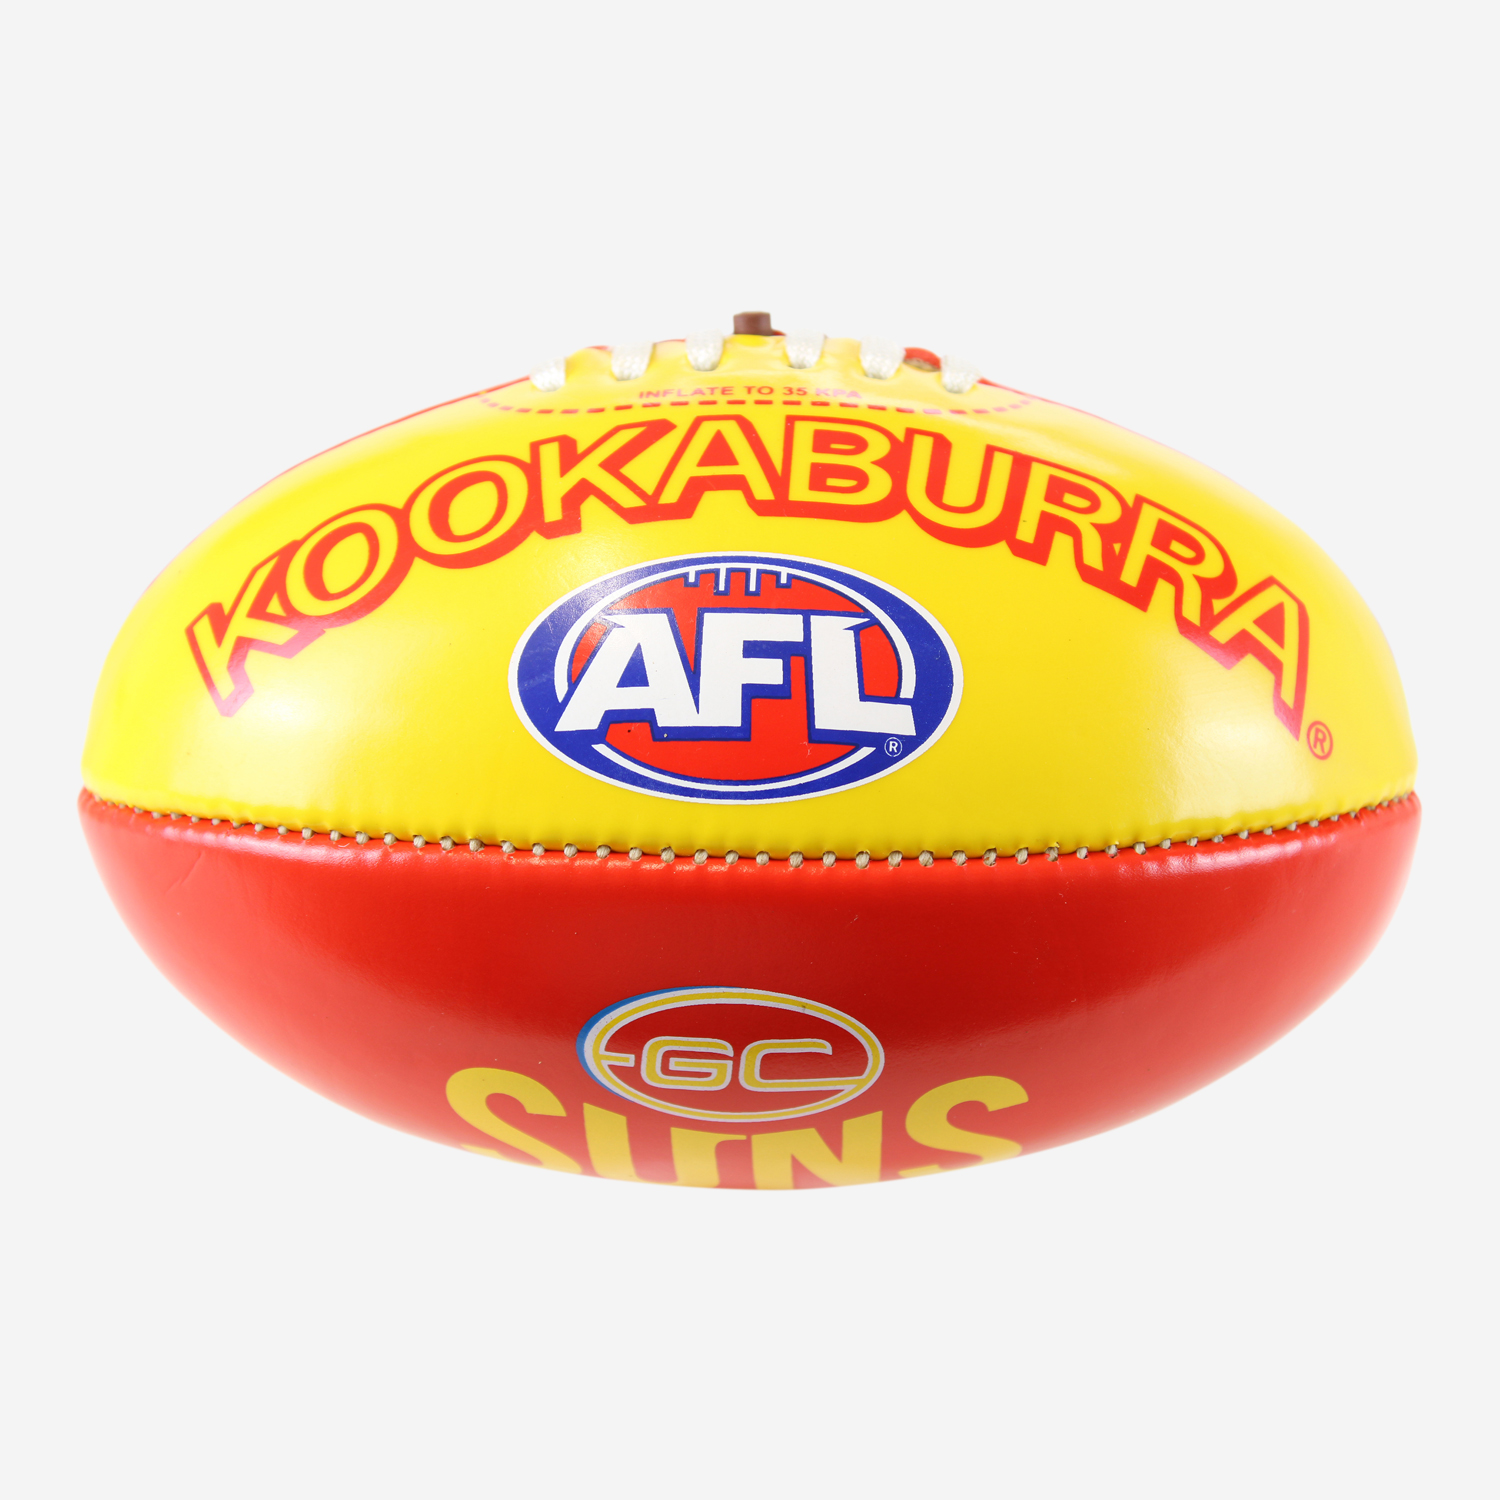 Kookaburra AFL Mini PVC Football 20CM Gold Coast Suns